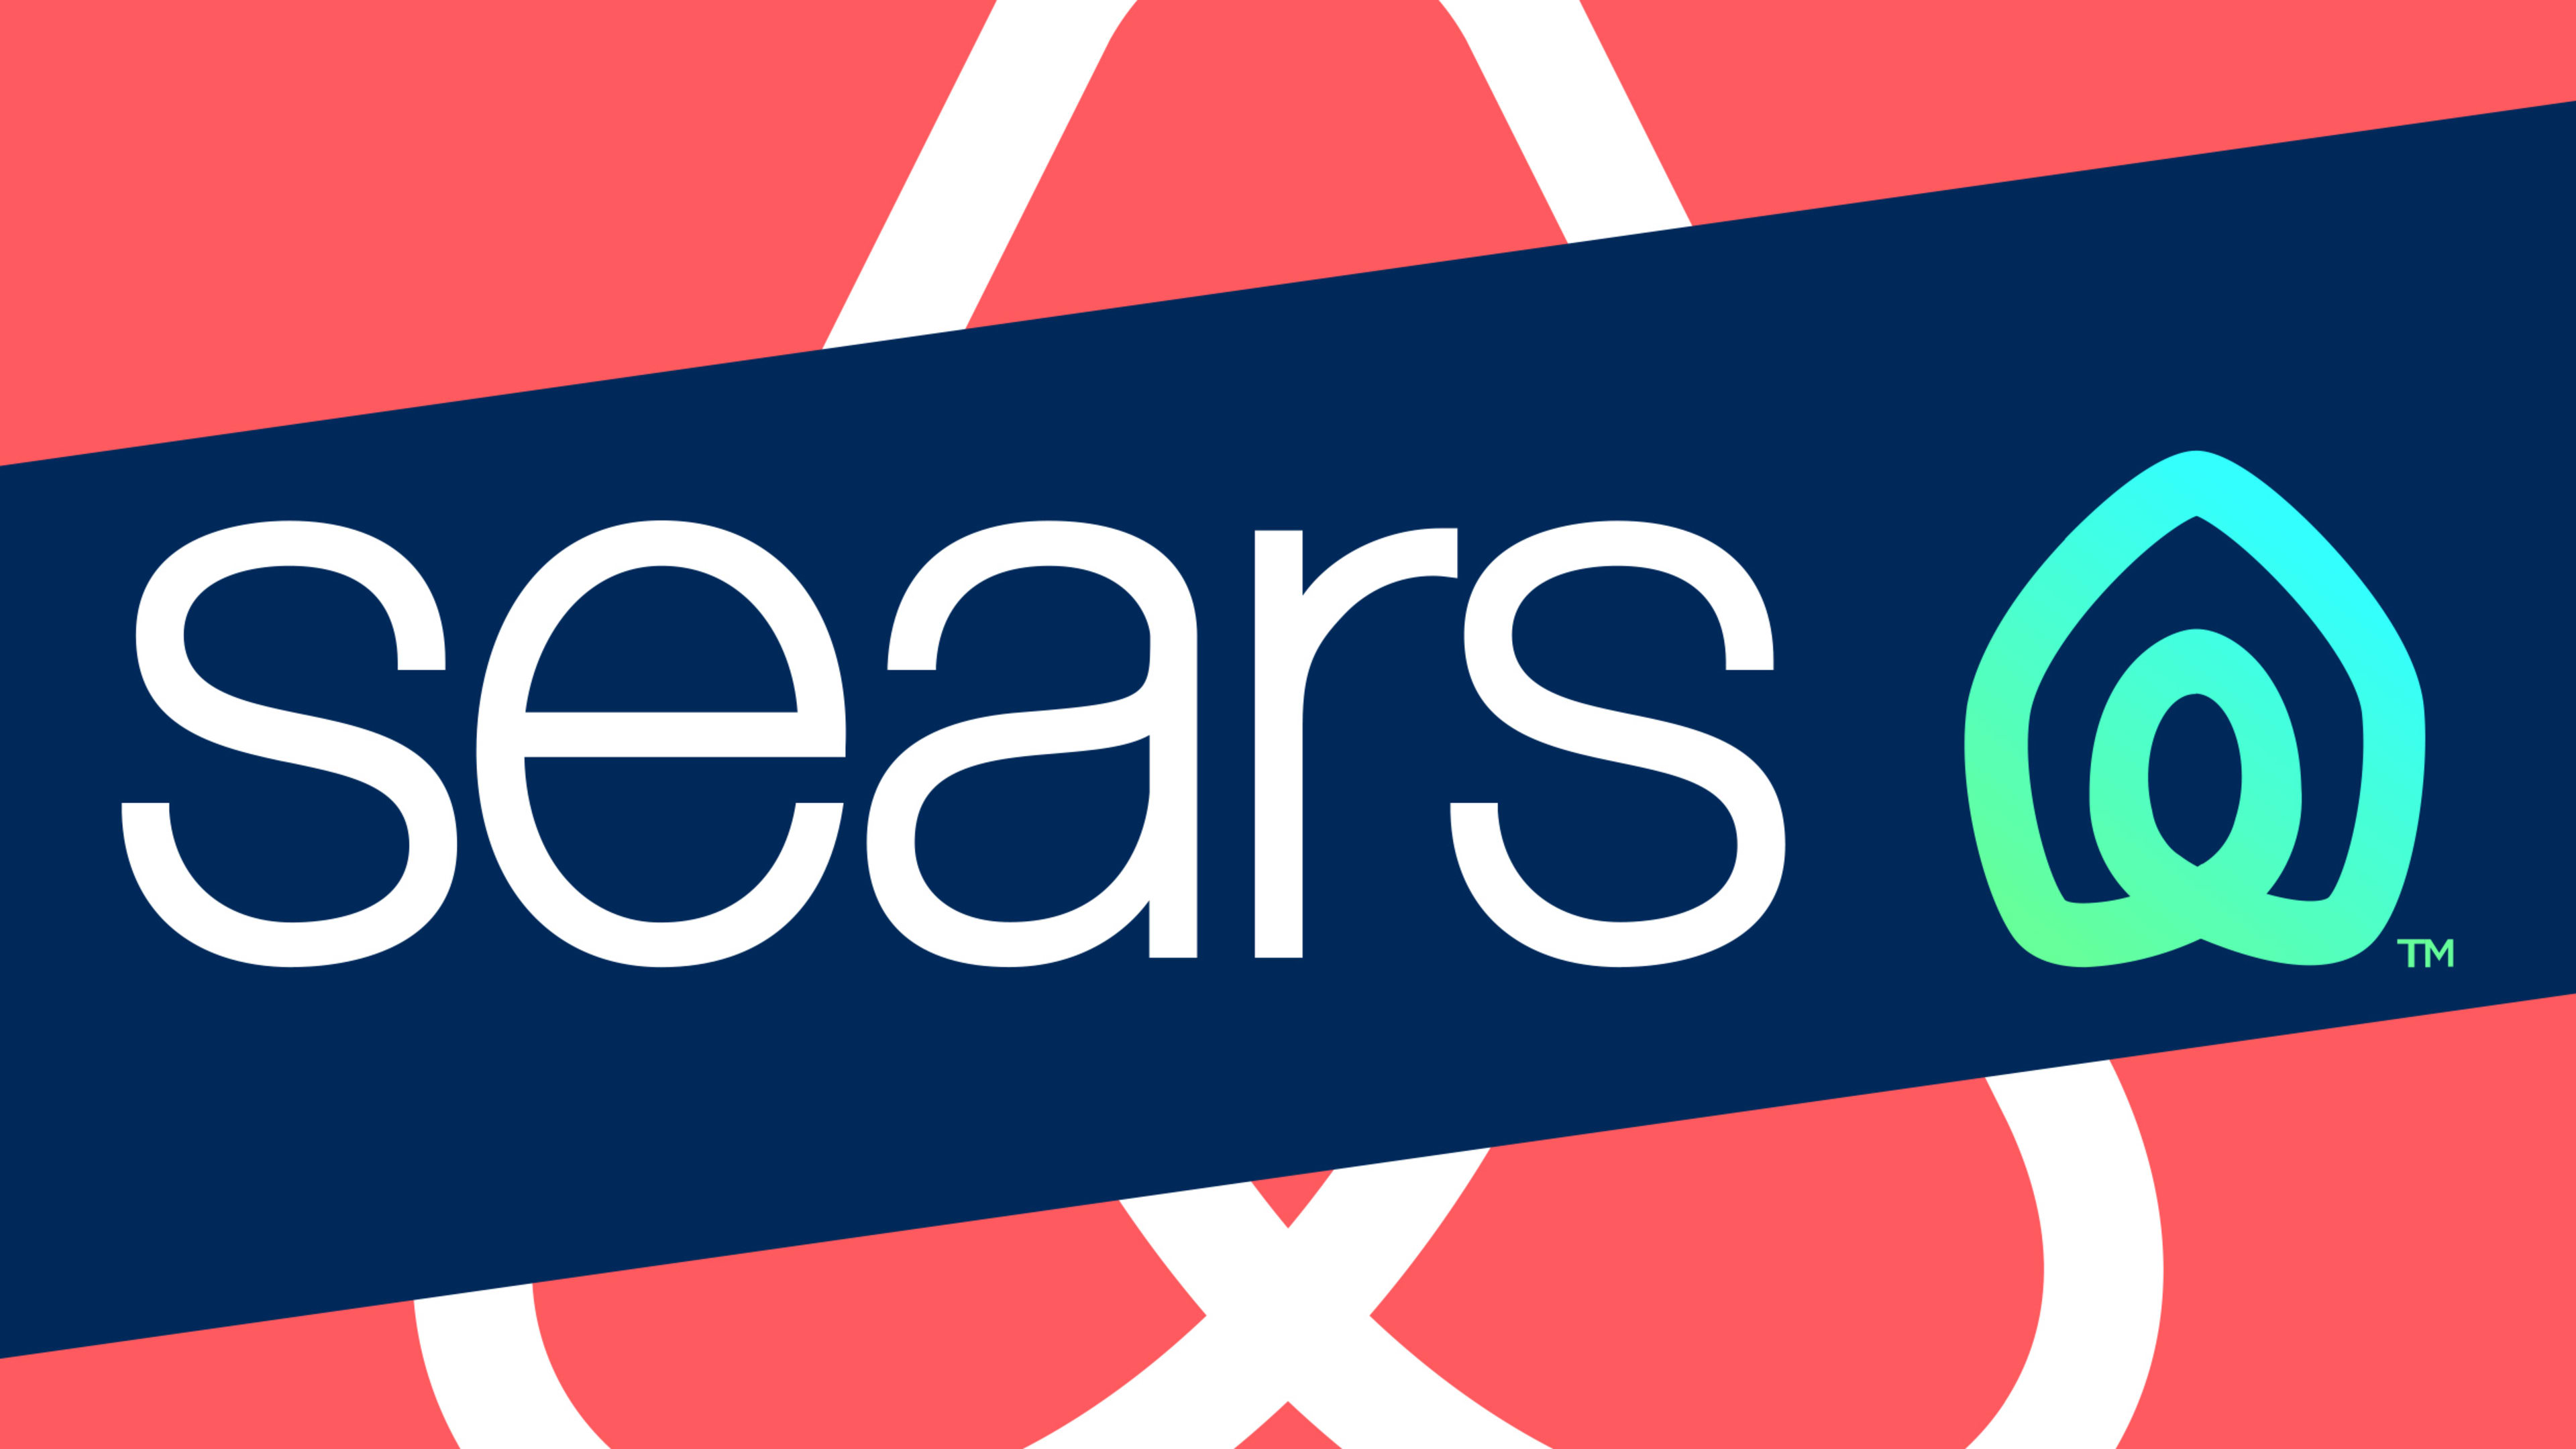 Sears’s new logo makes it look like a tech company